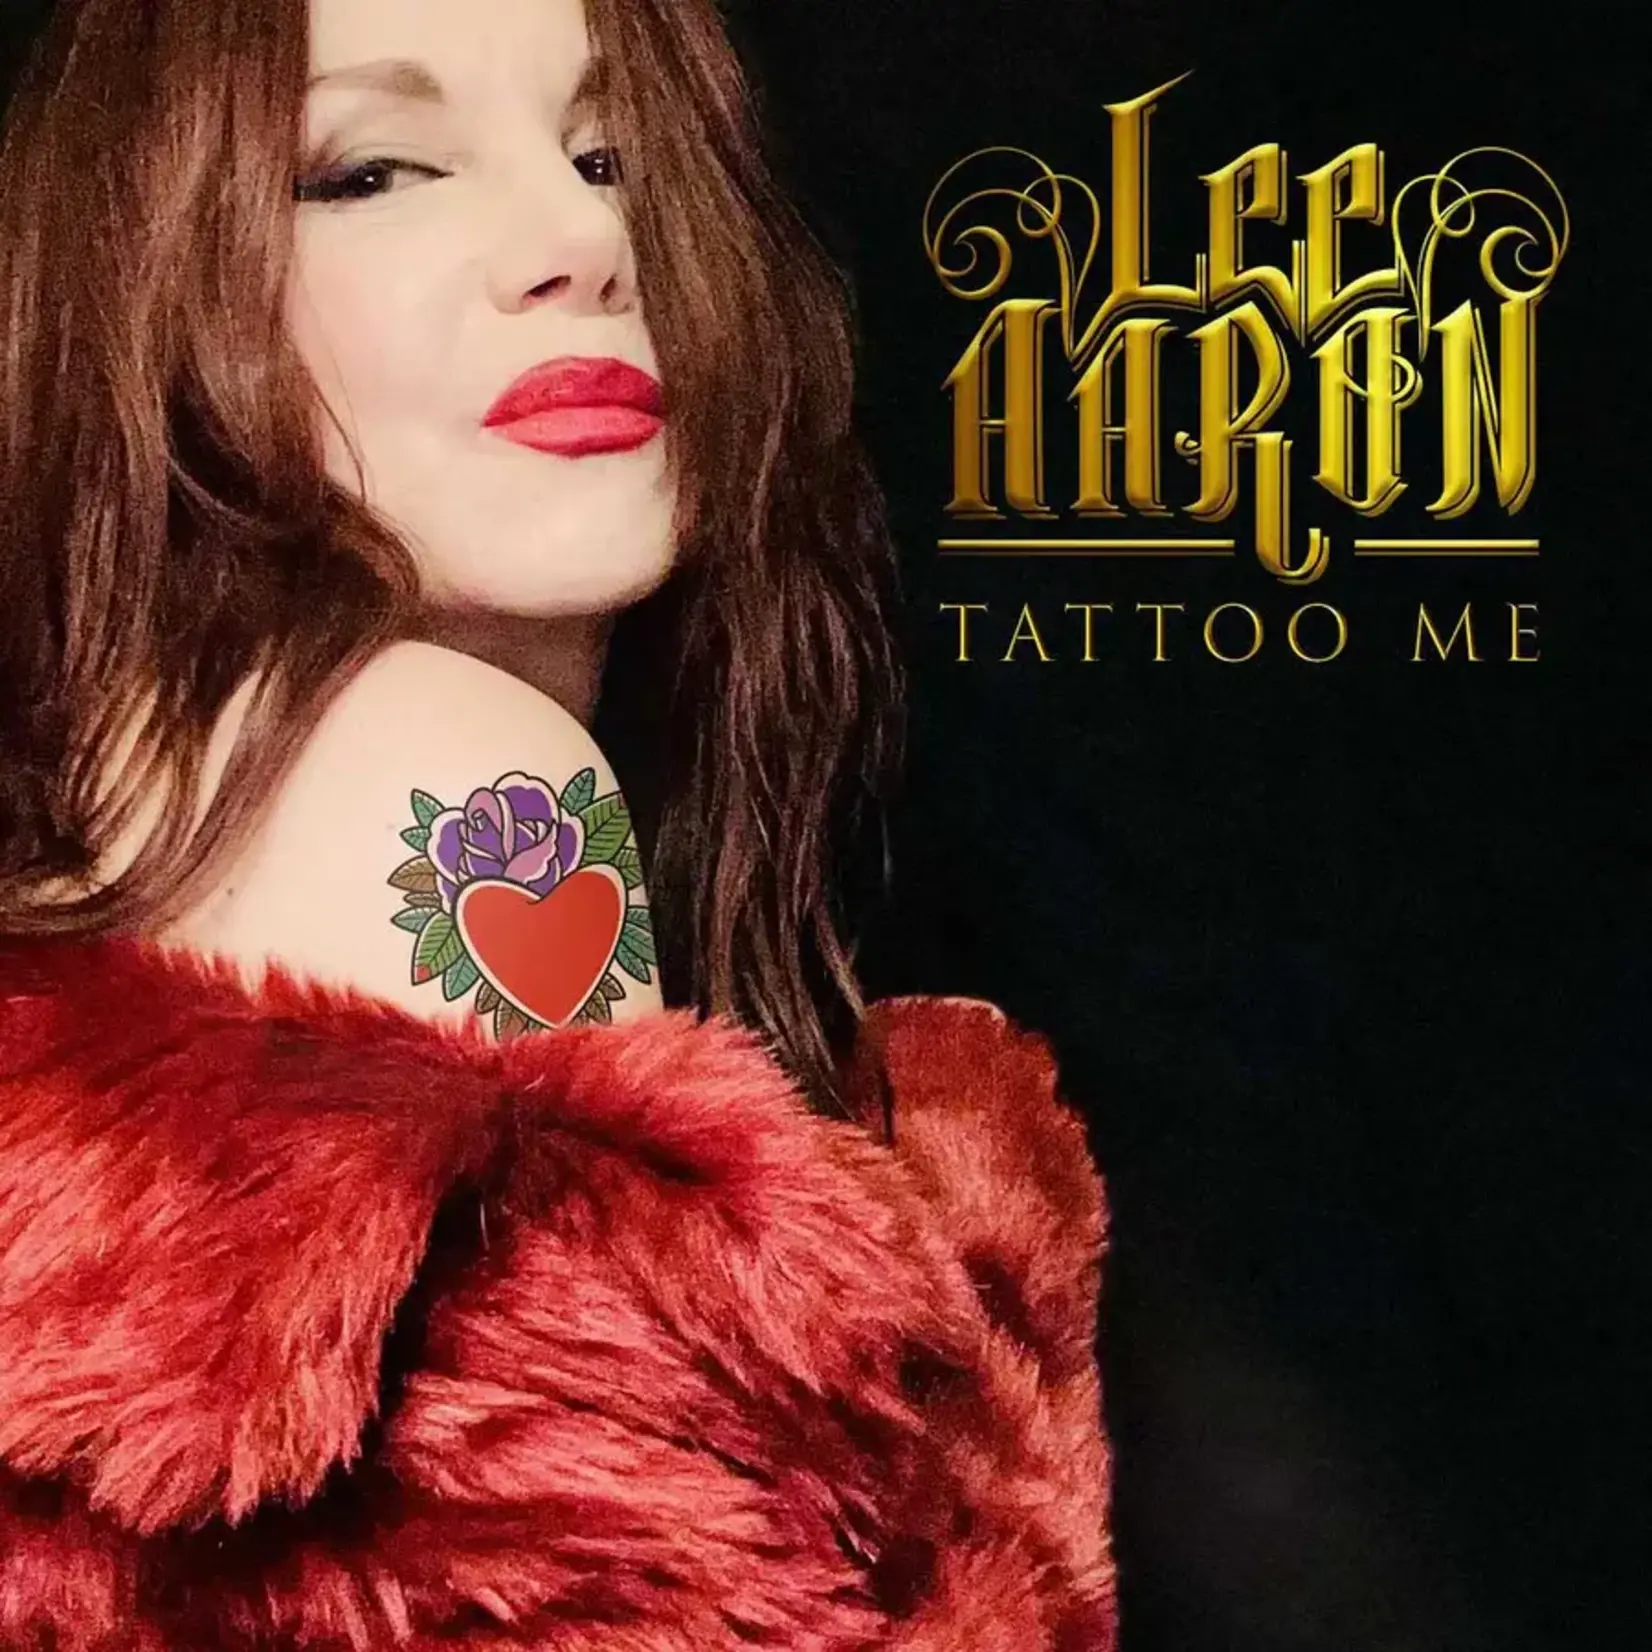 Lee Aaron - Tattoo Me [CD]